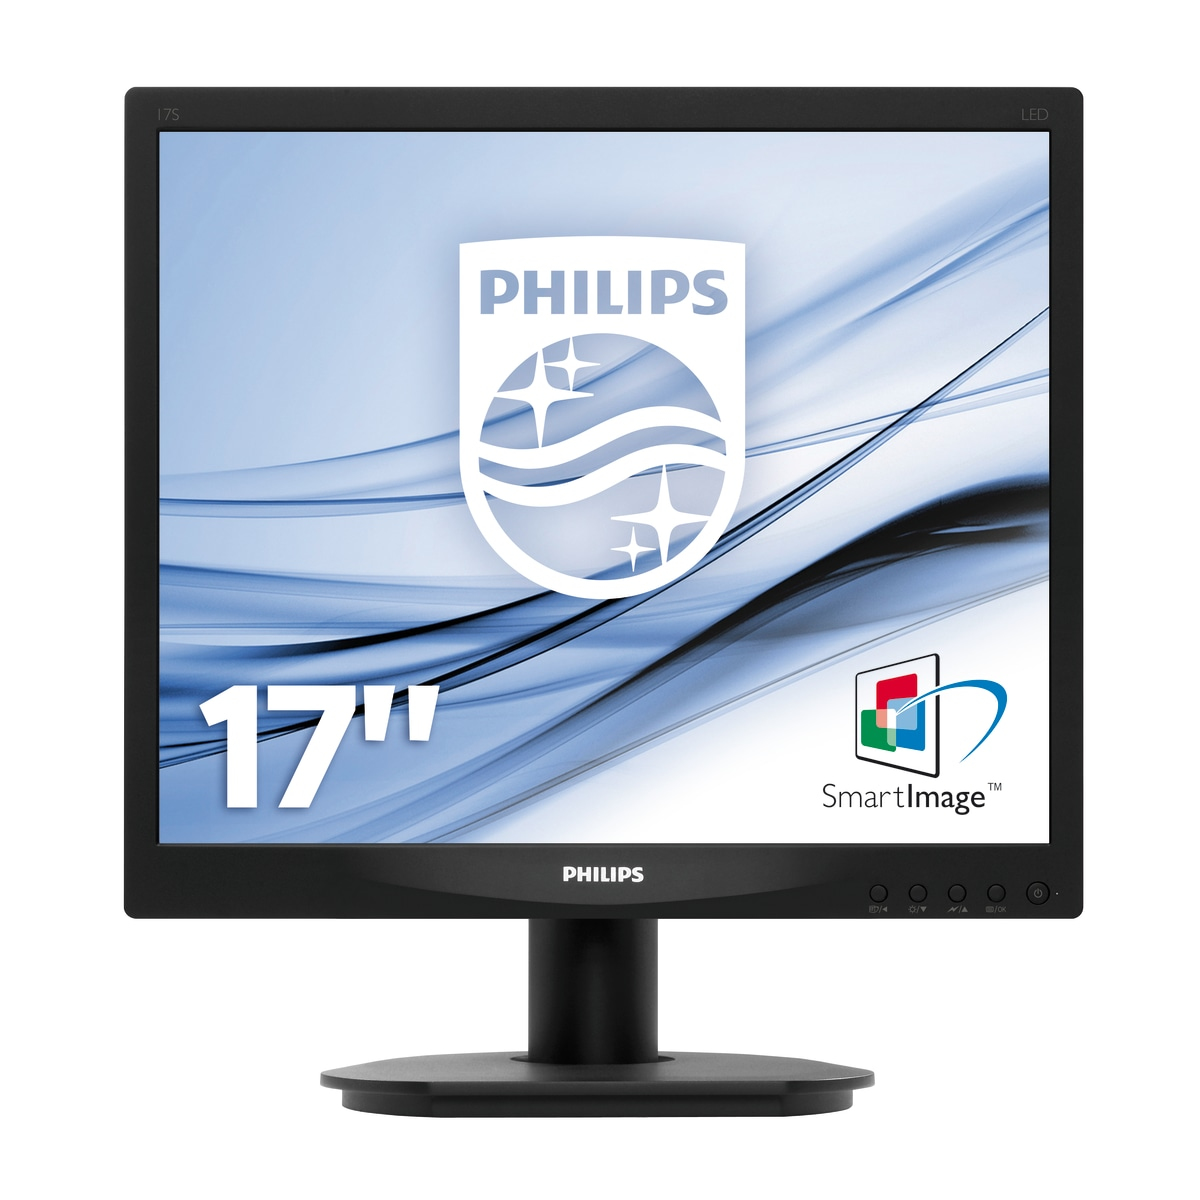 17in Lcd 1280x1024 5 4 5ms Mmd Philips Monitors 17s4lsb 00 8712581698232